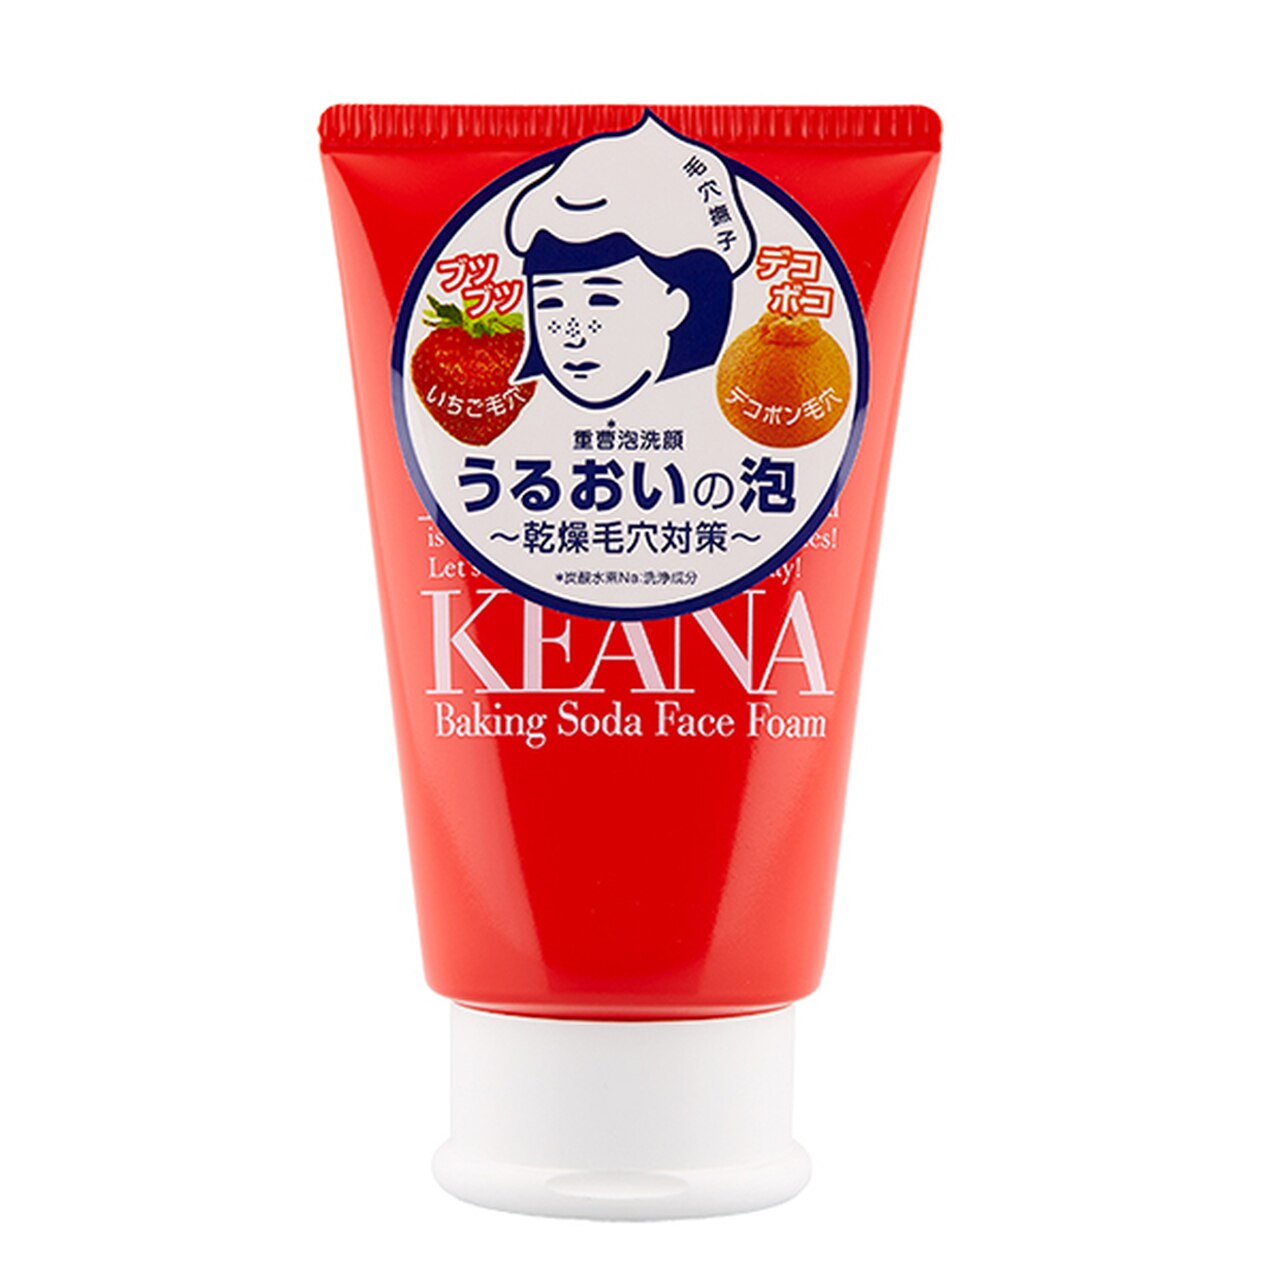 Keana 石澤研究所 毛穴撫子重曹潔面泡泡100g 潔膚產品 個人護理 選購種類 Ciaogogo